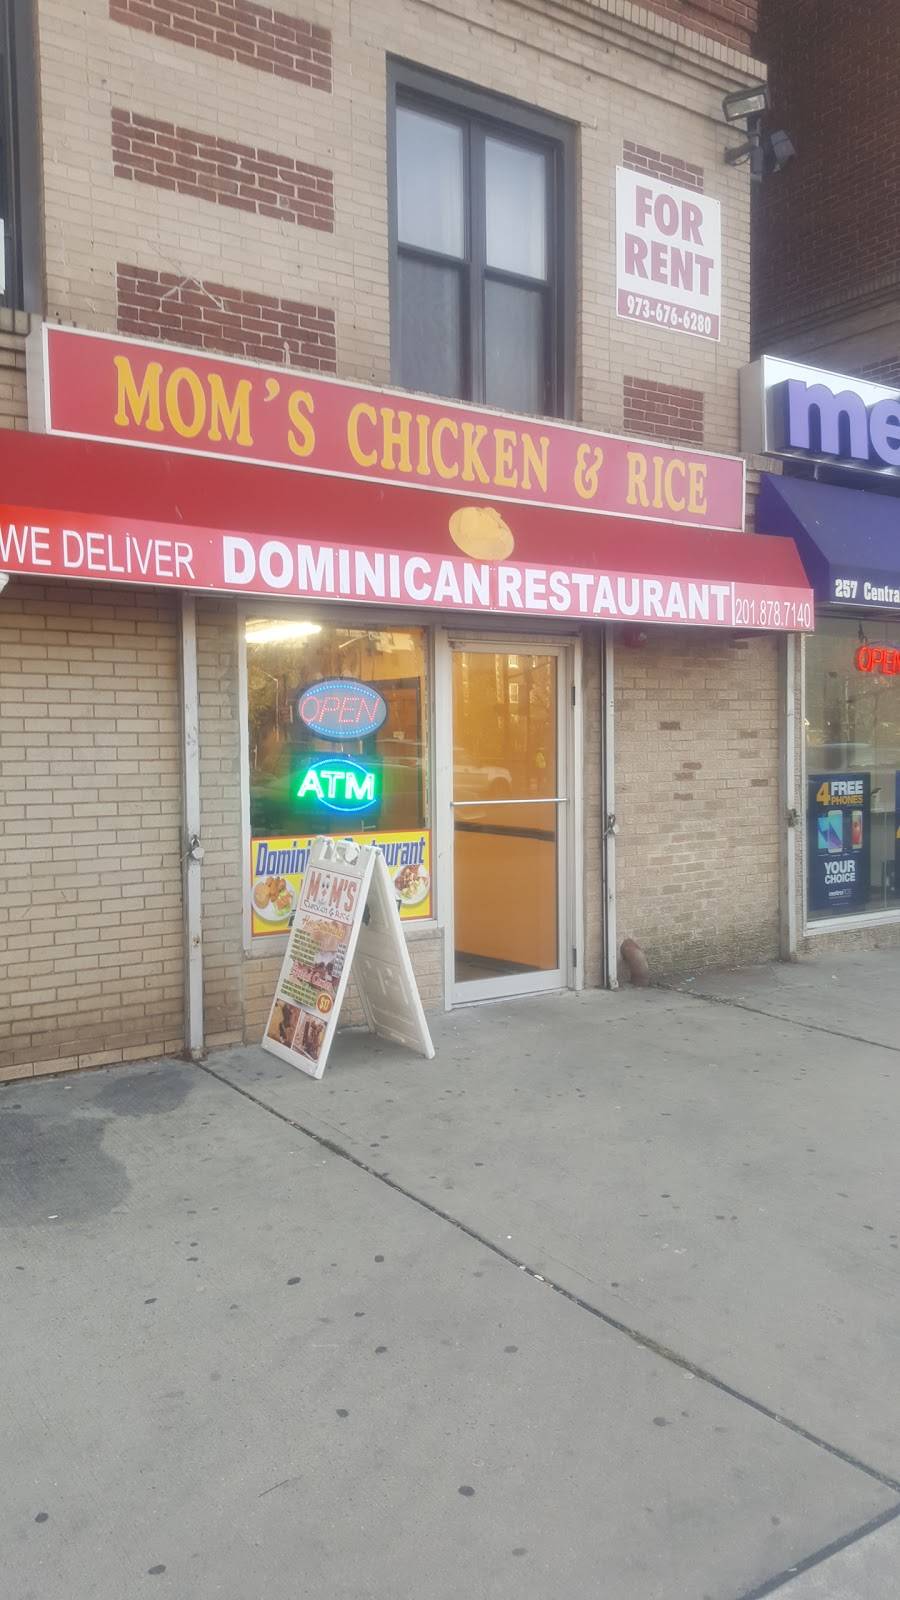 Moms Chicken Rice - Restaurant East Orange Nj 07018 Usa